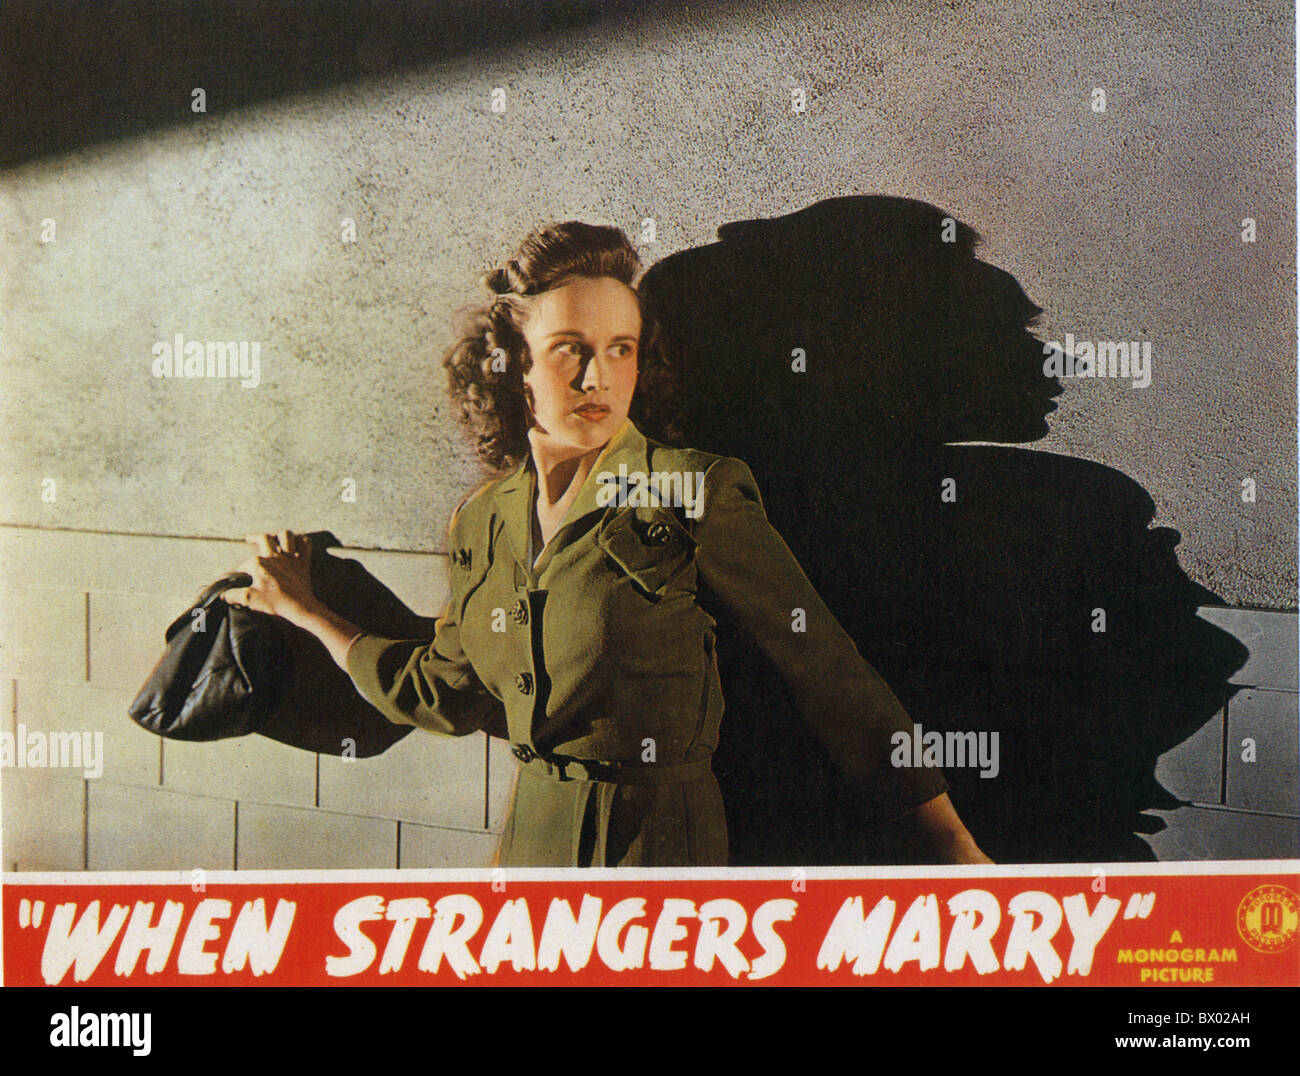 WHEN STRANGERS MARRY Poster for 1944 Monogram film with Kim Hunter Stock Photo